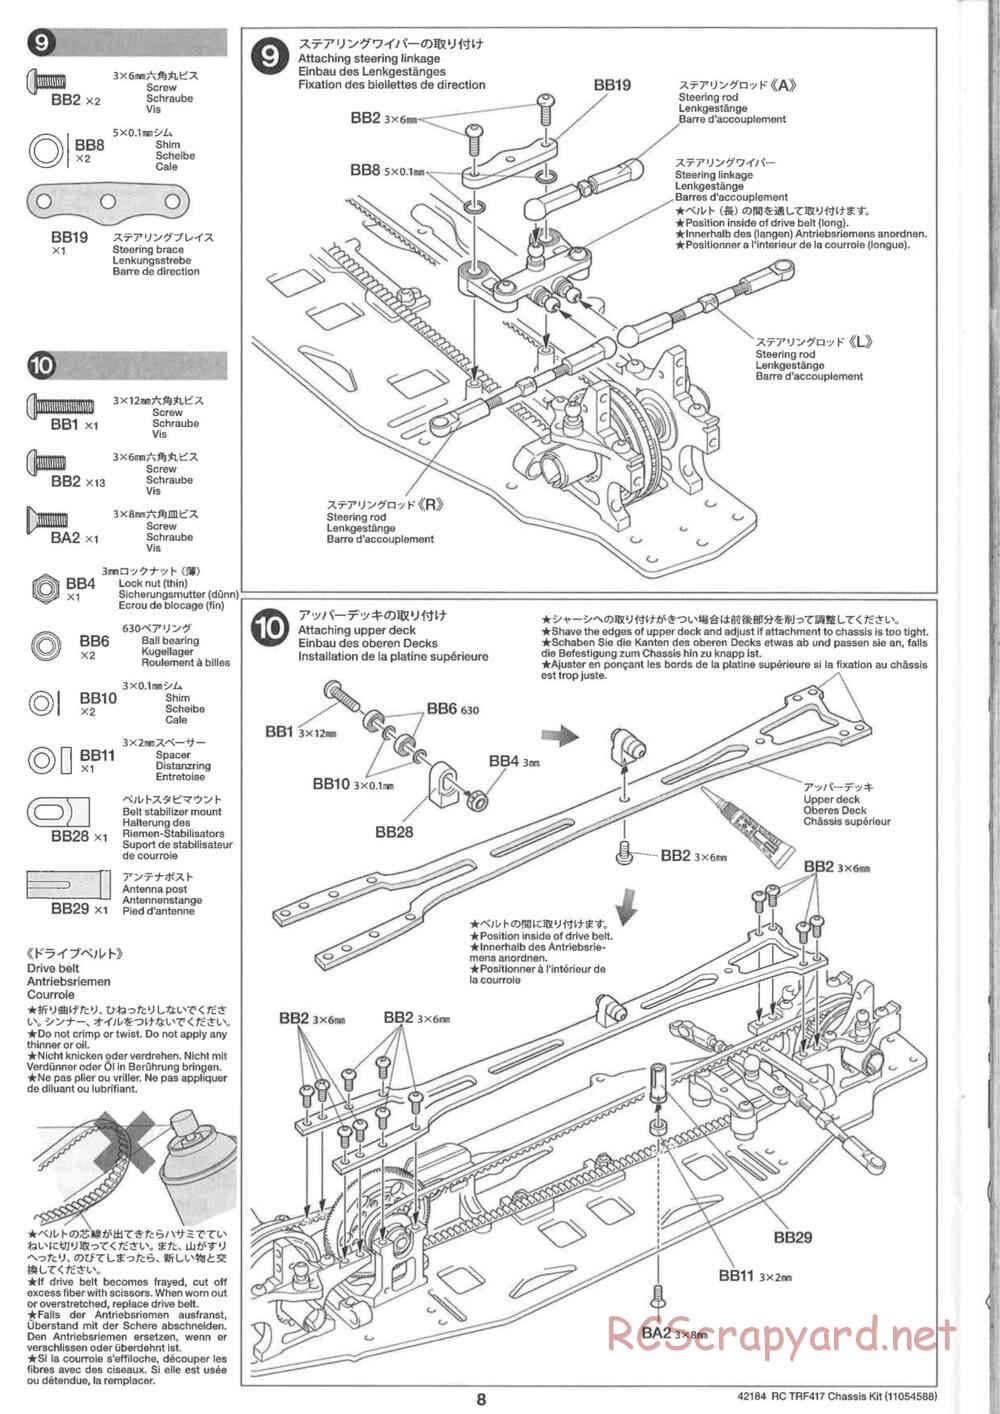 Tamiya - TRF417 Chassis - Manual - Page 8